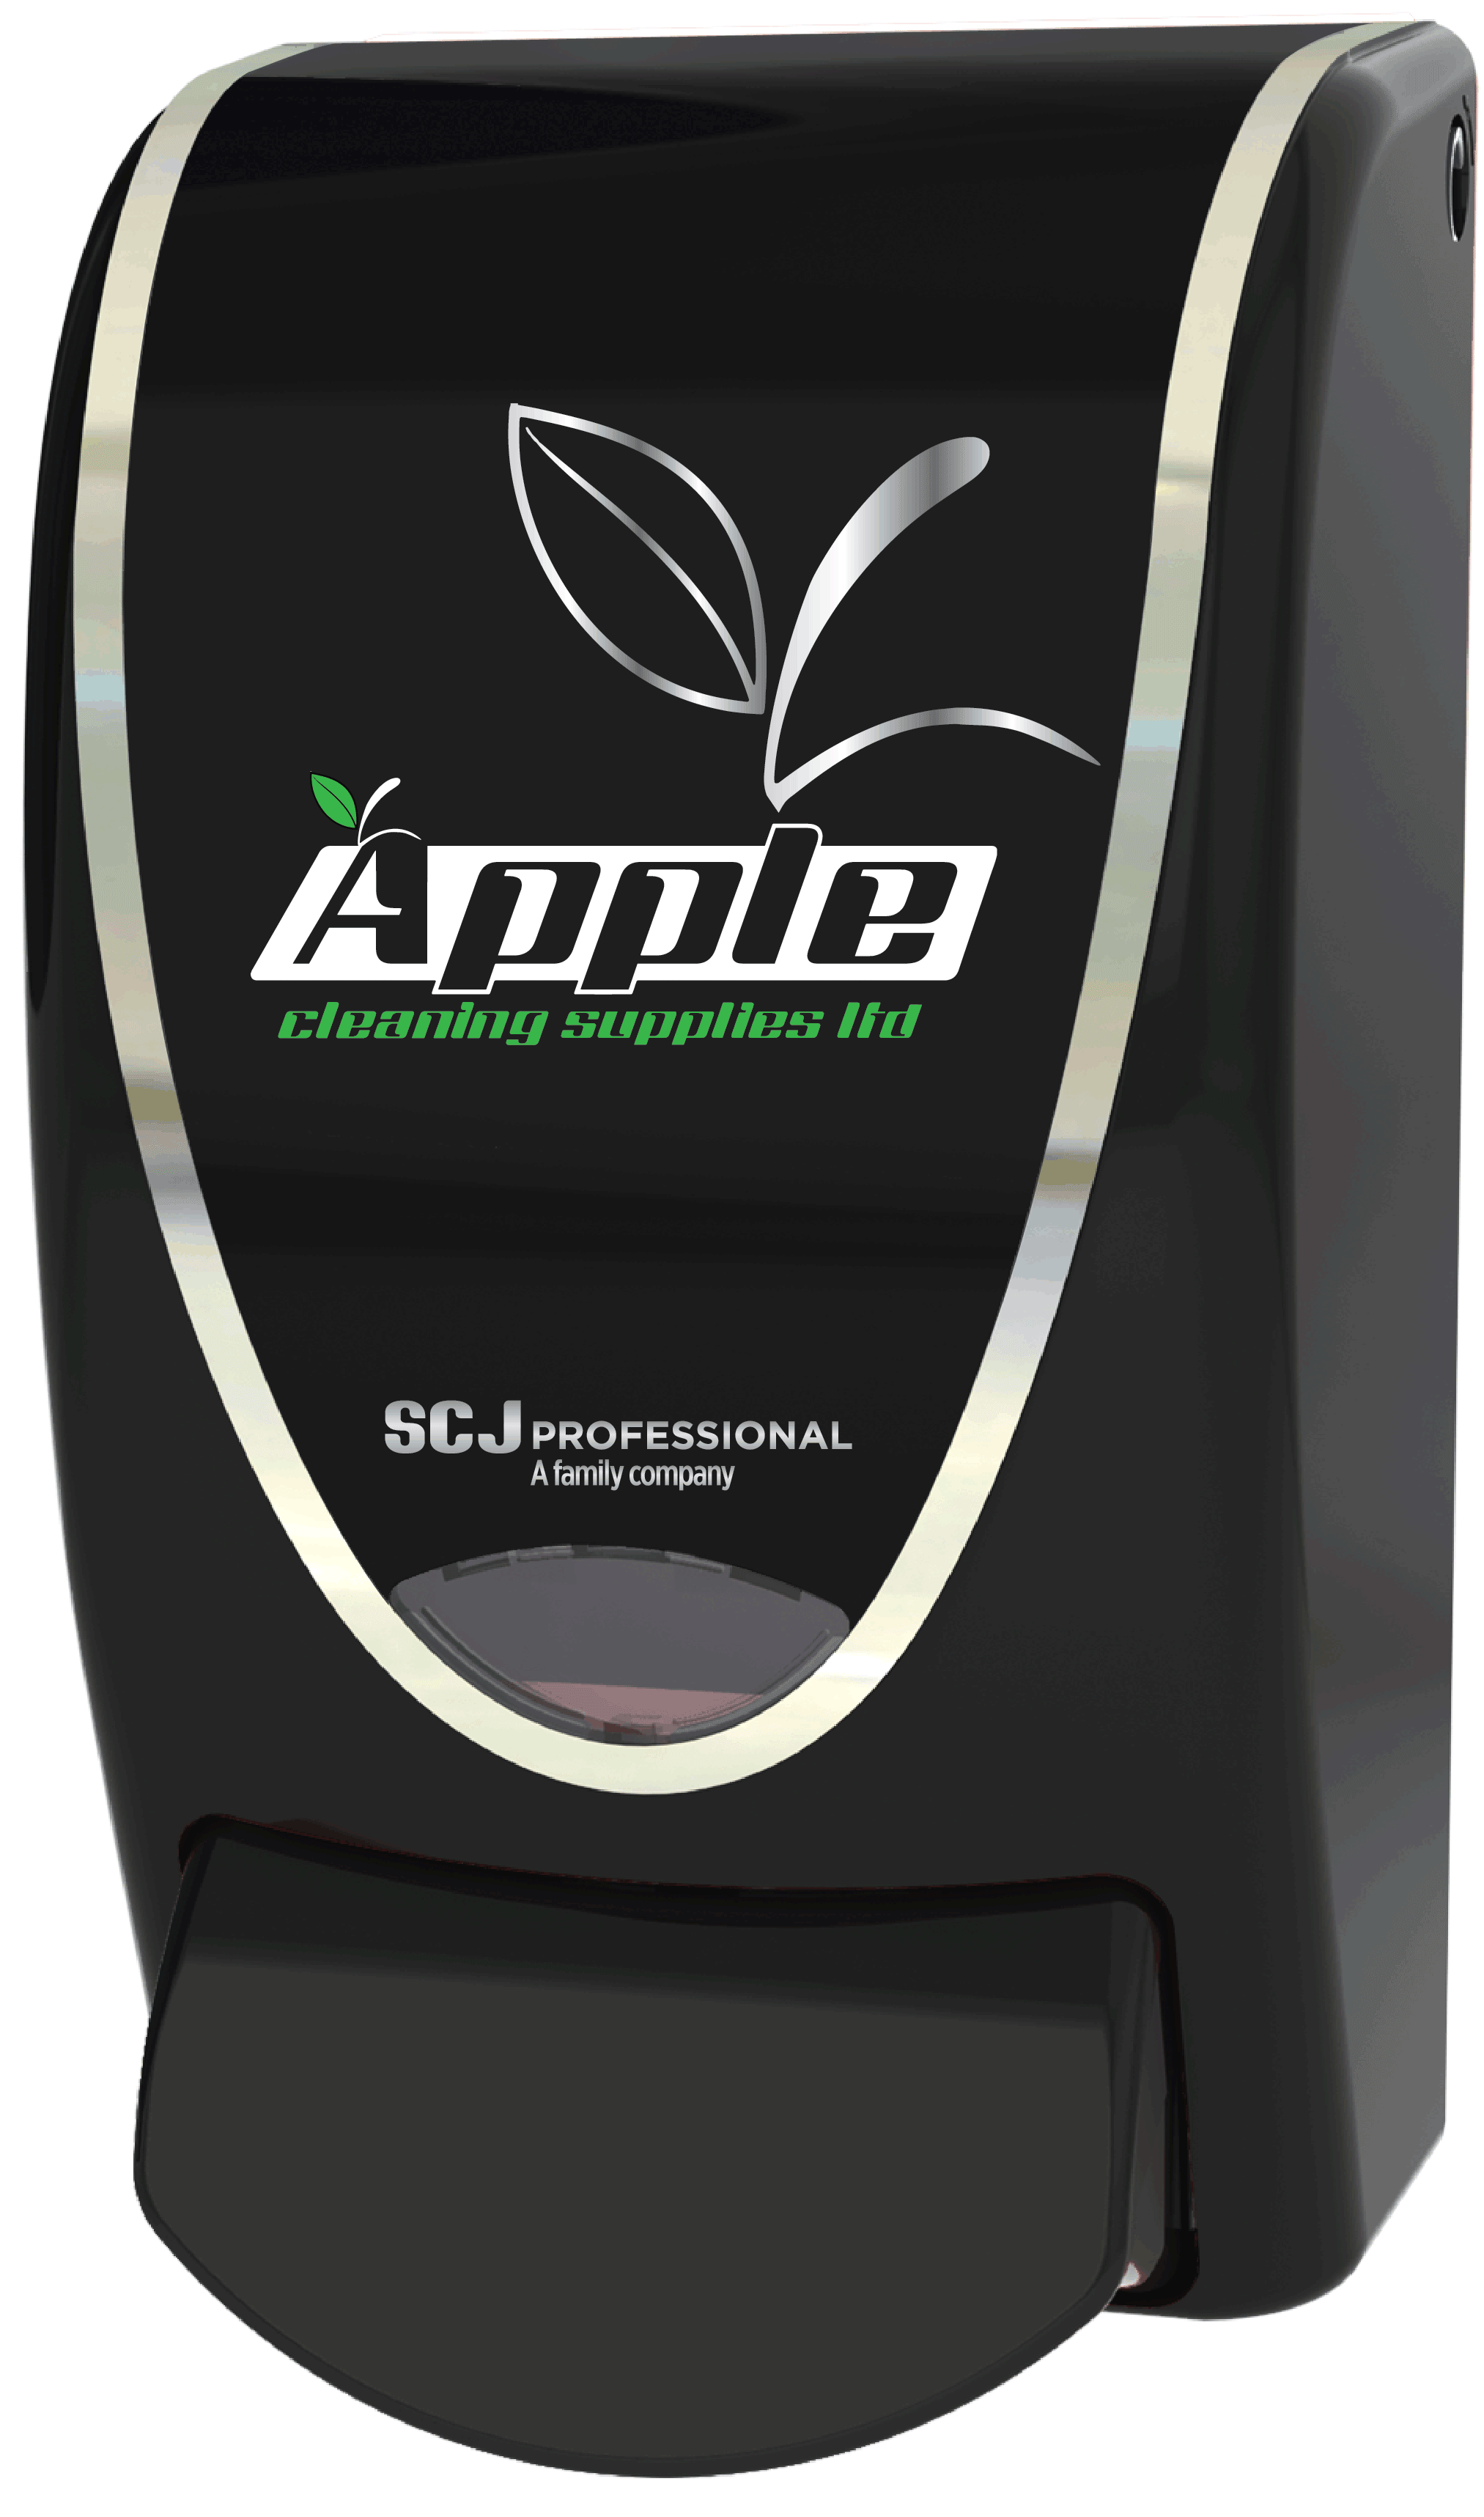 DEB® Proline Curve™ Manual Soap Dispenser Black with Apple Logo 1L